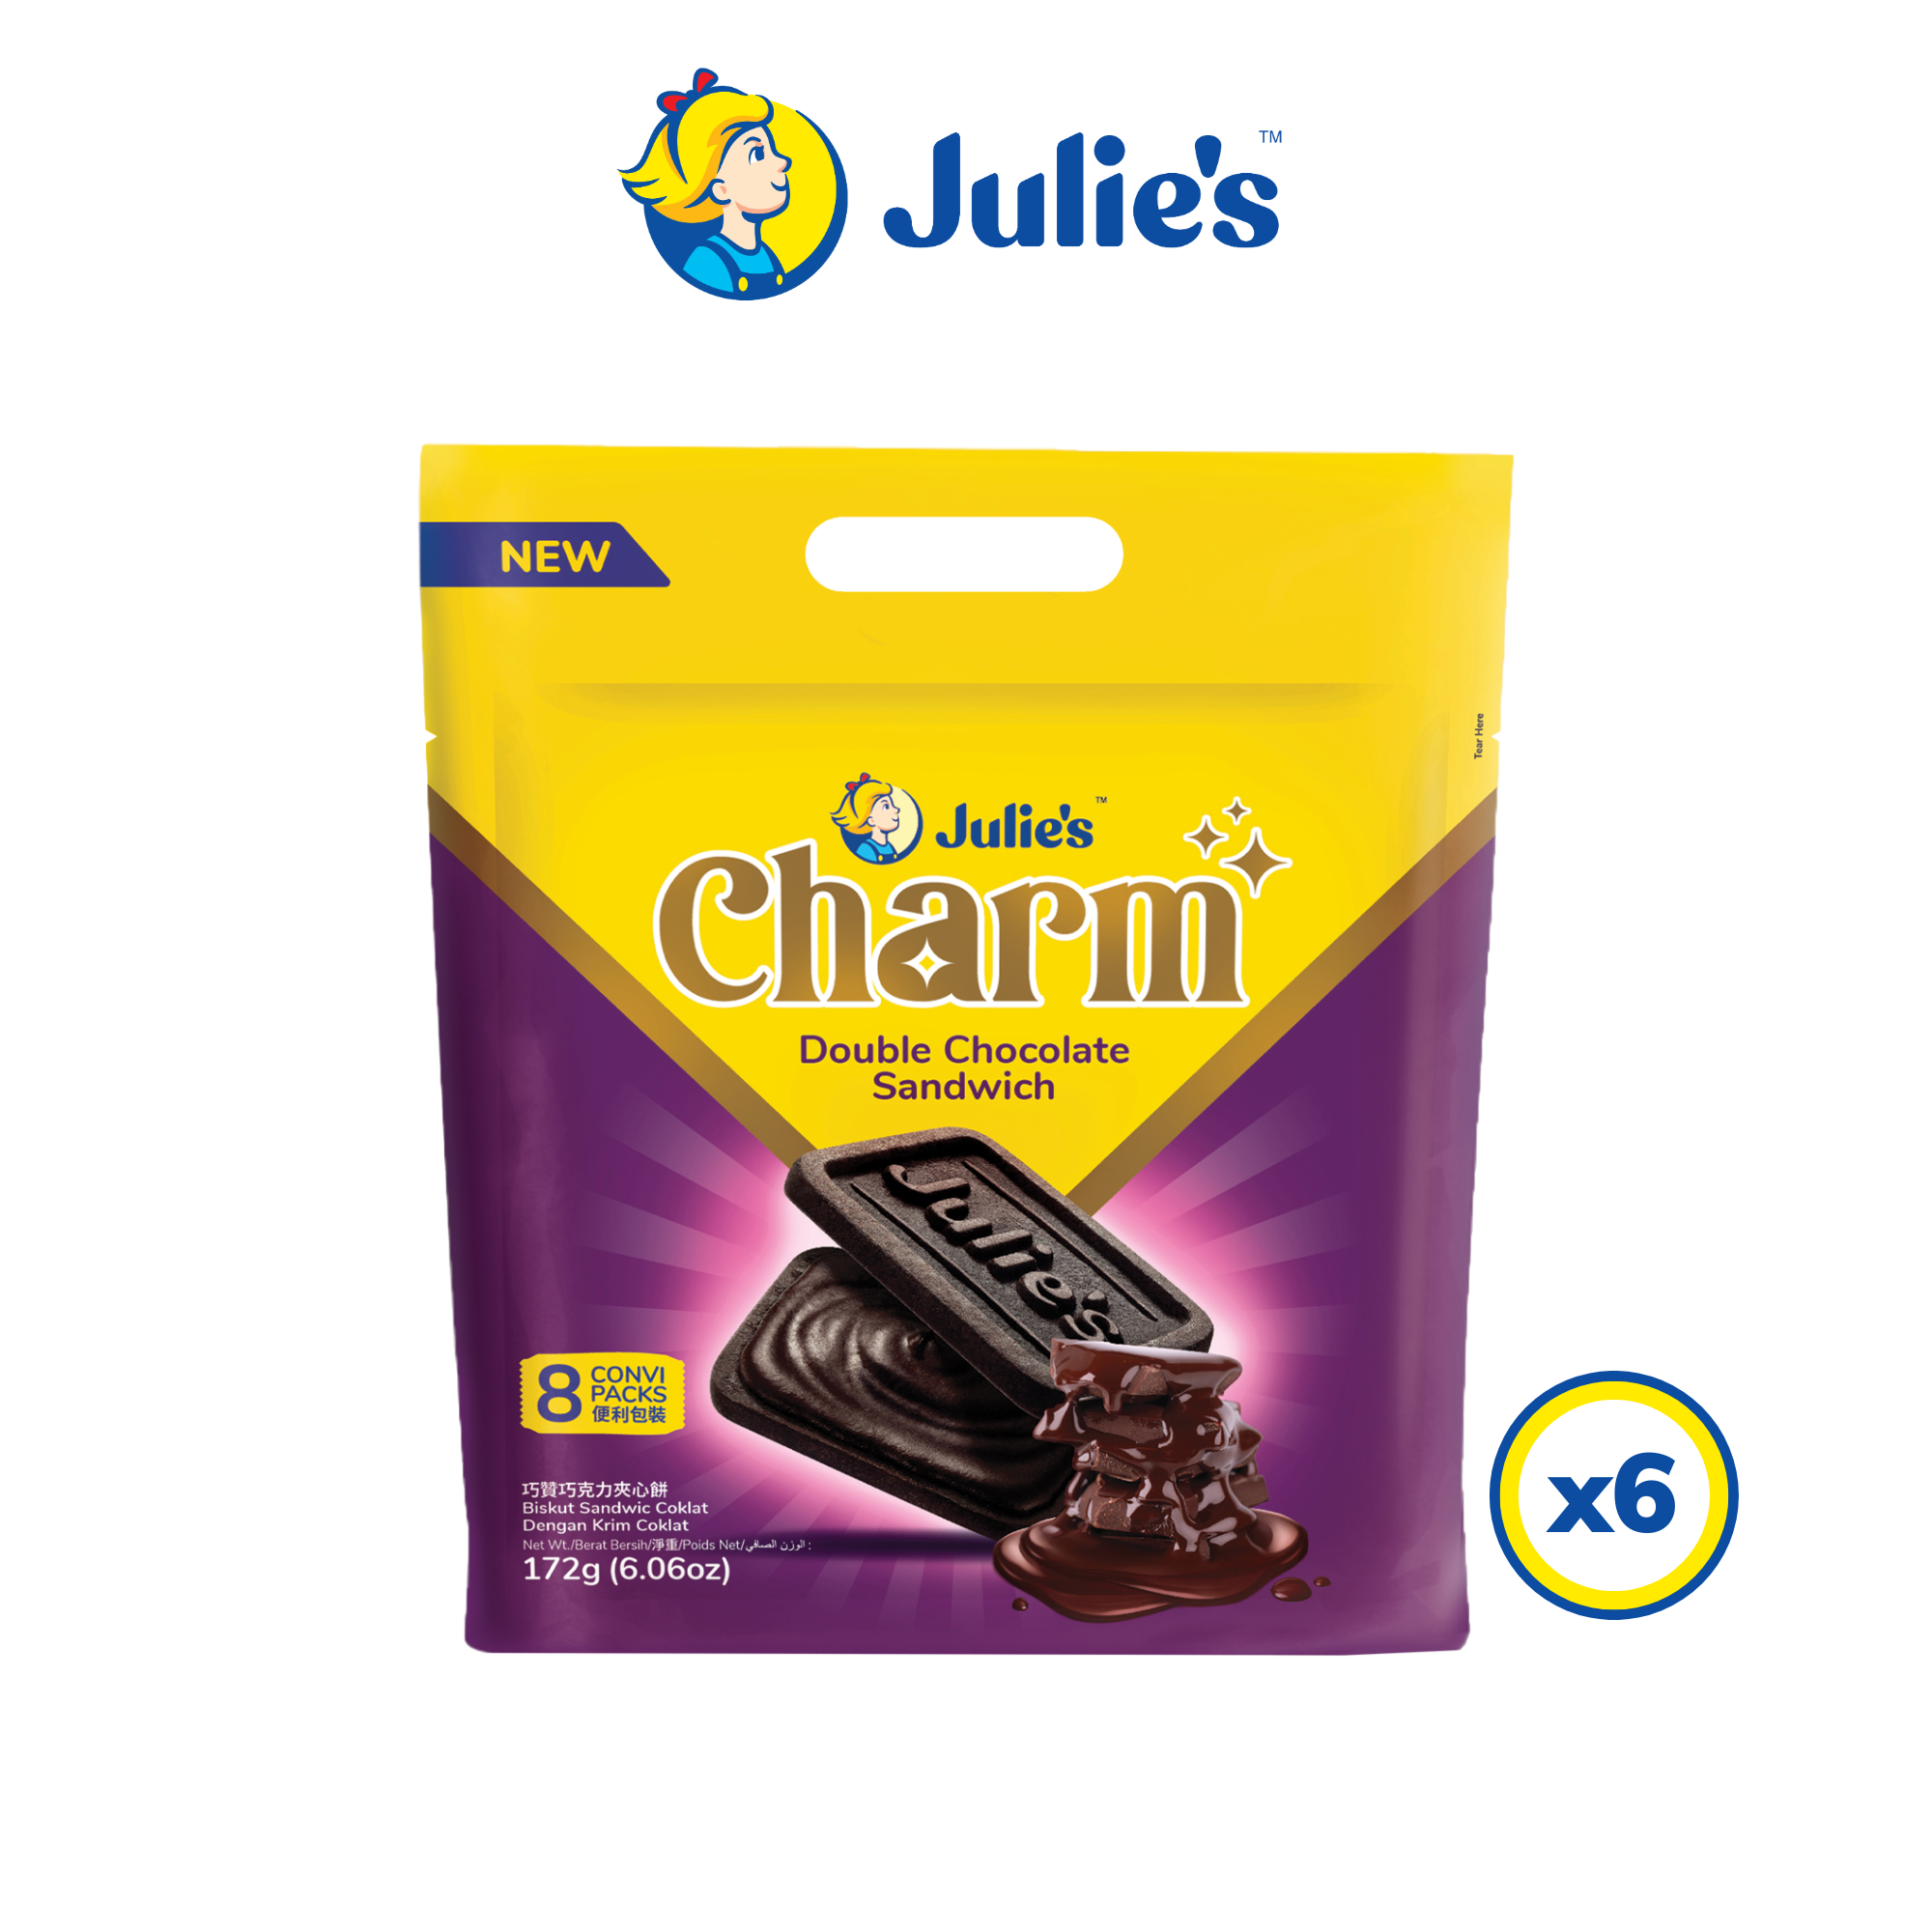 Julie's Charm Double Chocolate Sandwich 172g x 6 packs